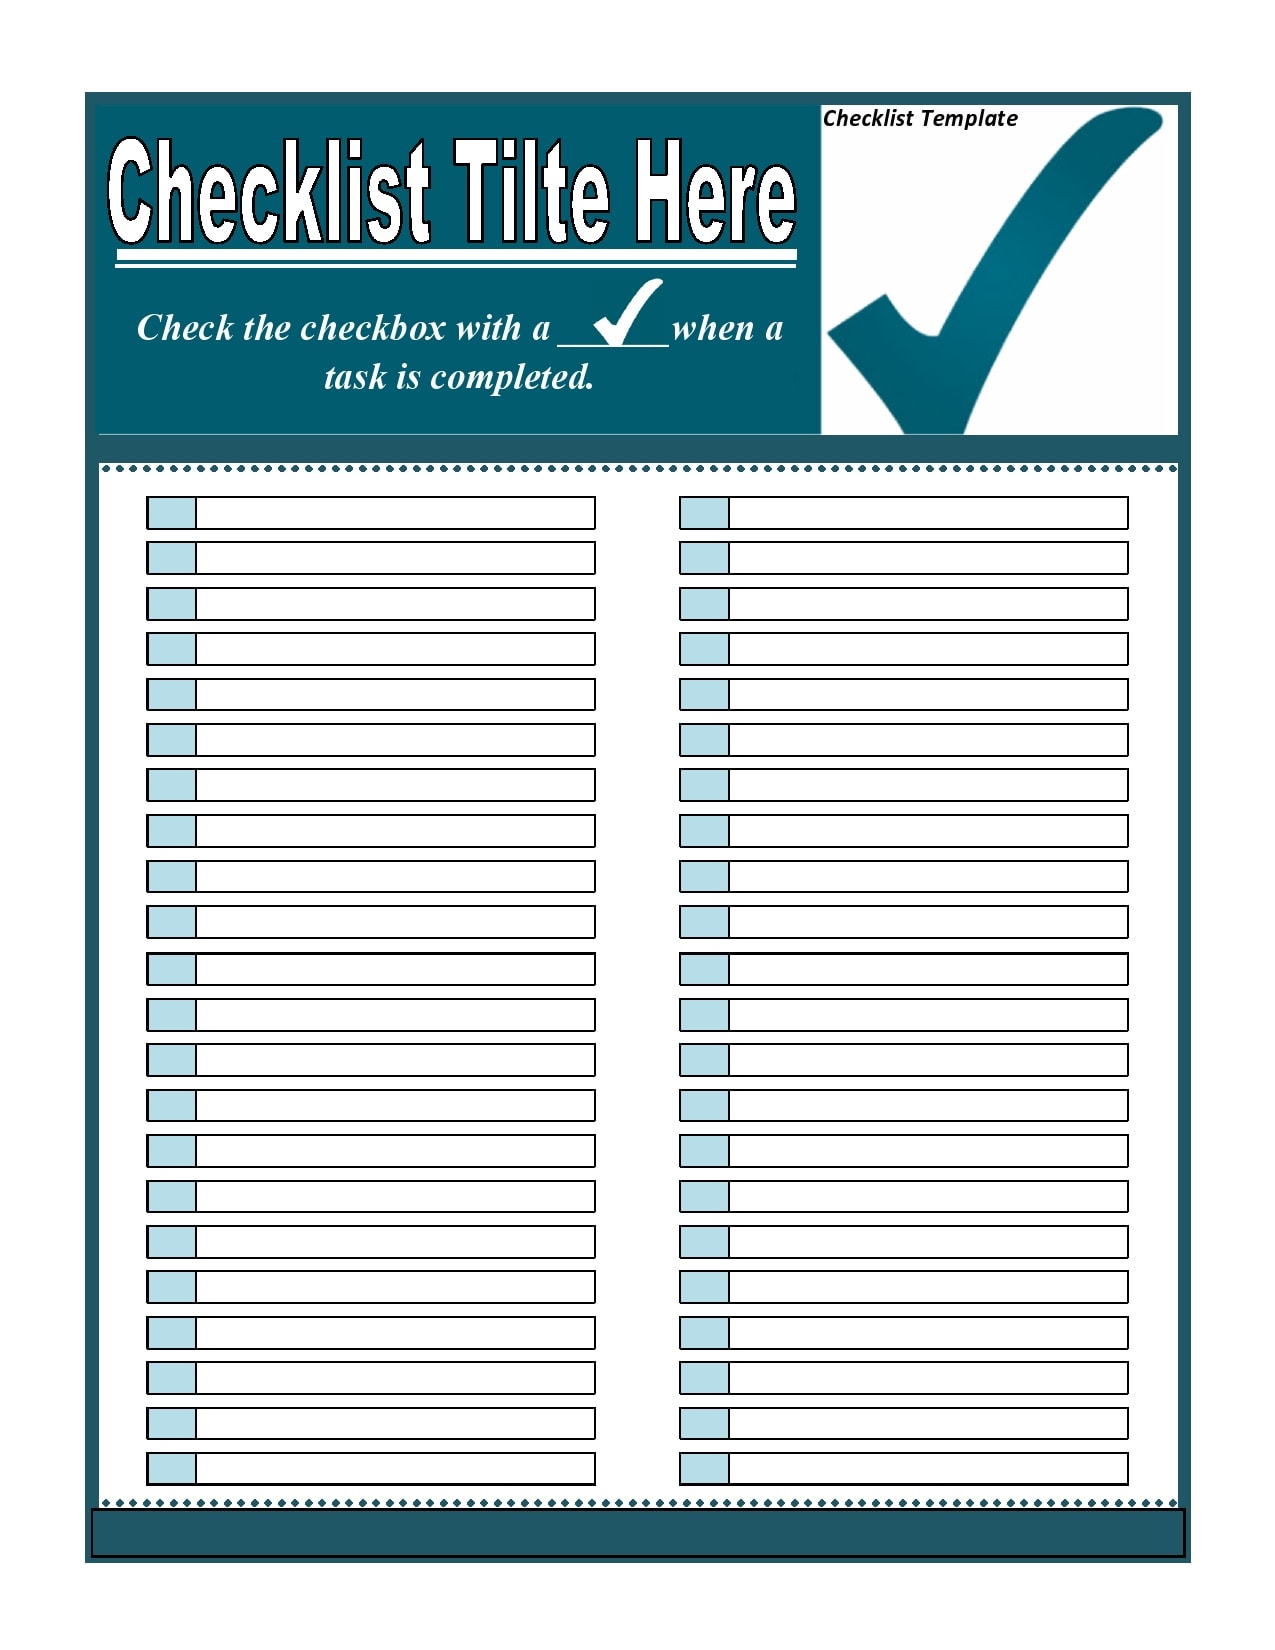 20 Free Checklist Templates (Word, Excel) - PrintableTemplates With Regard To Print Check Template Word